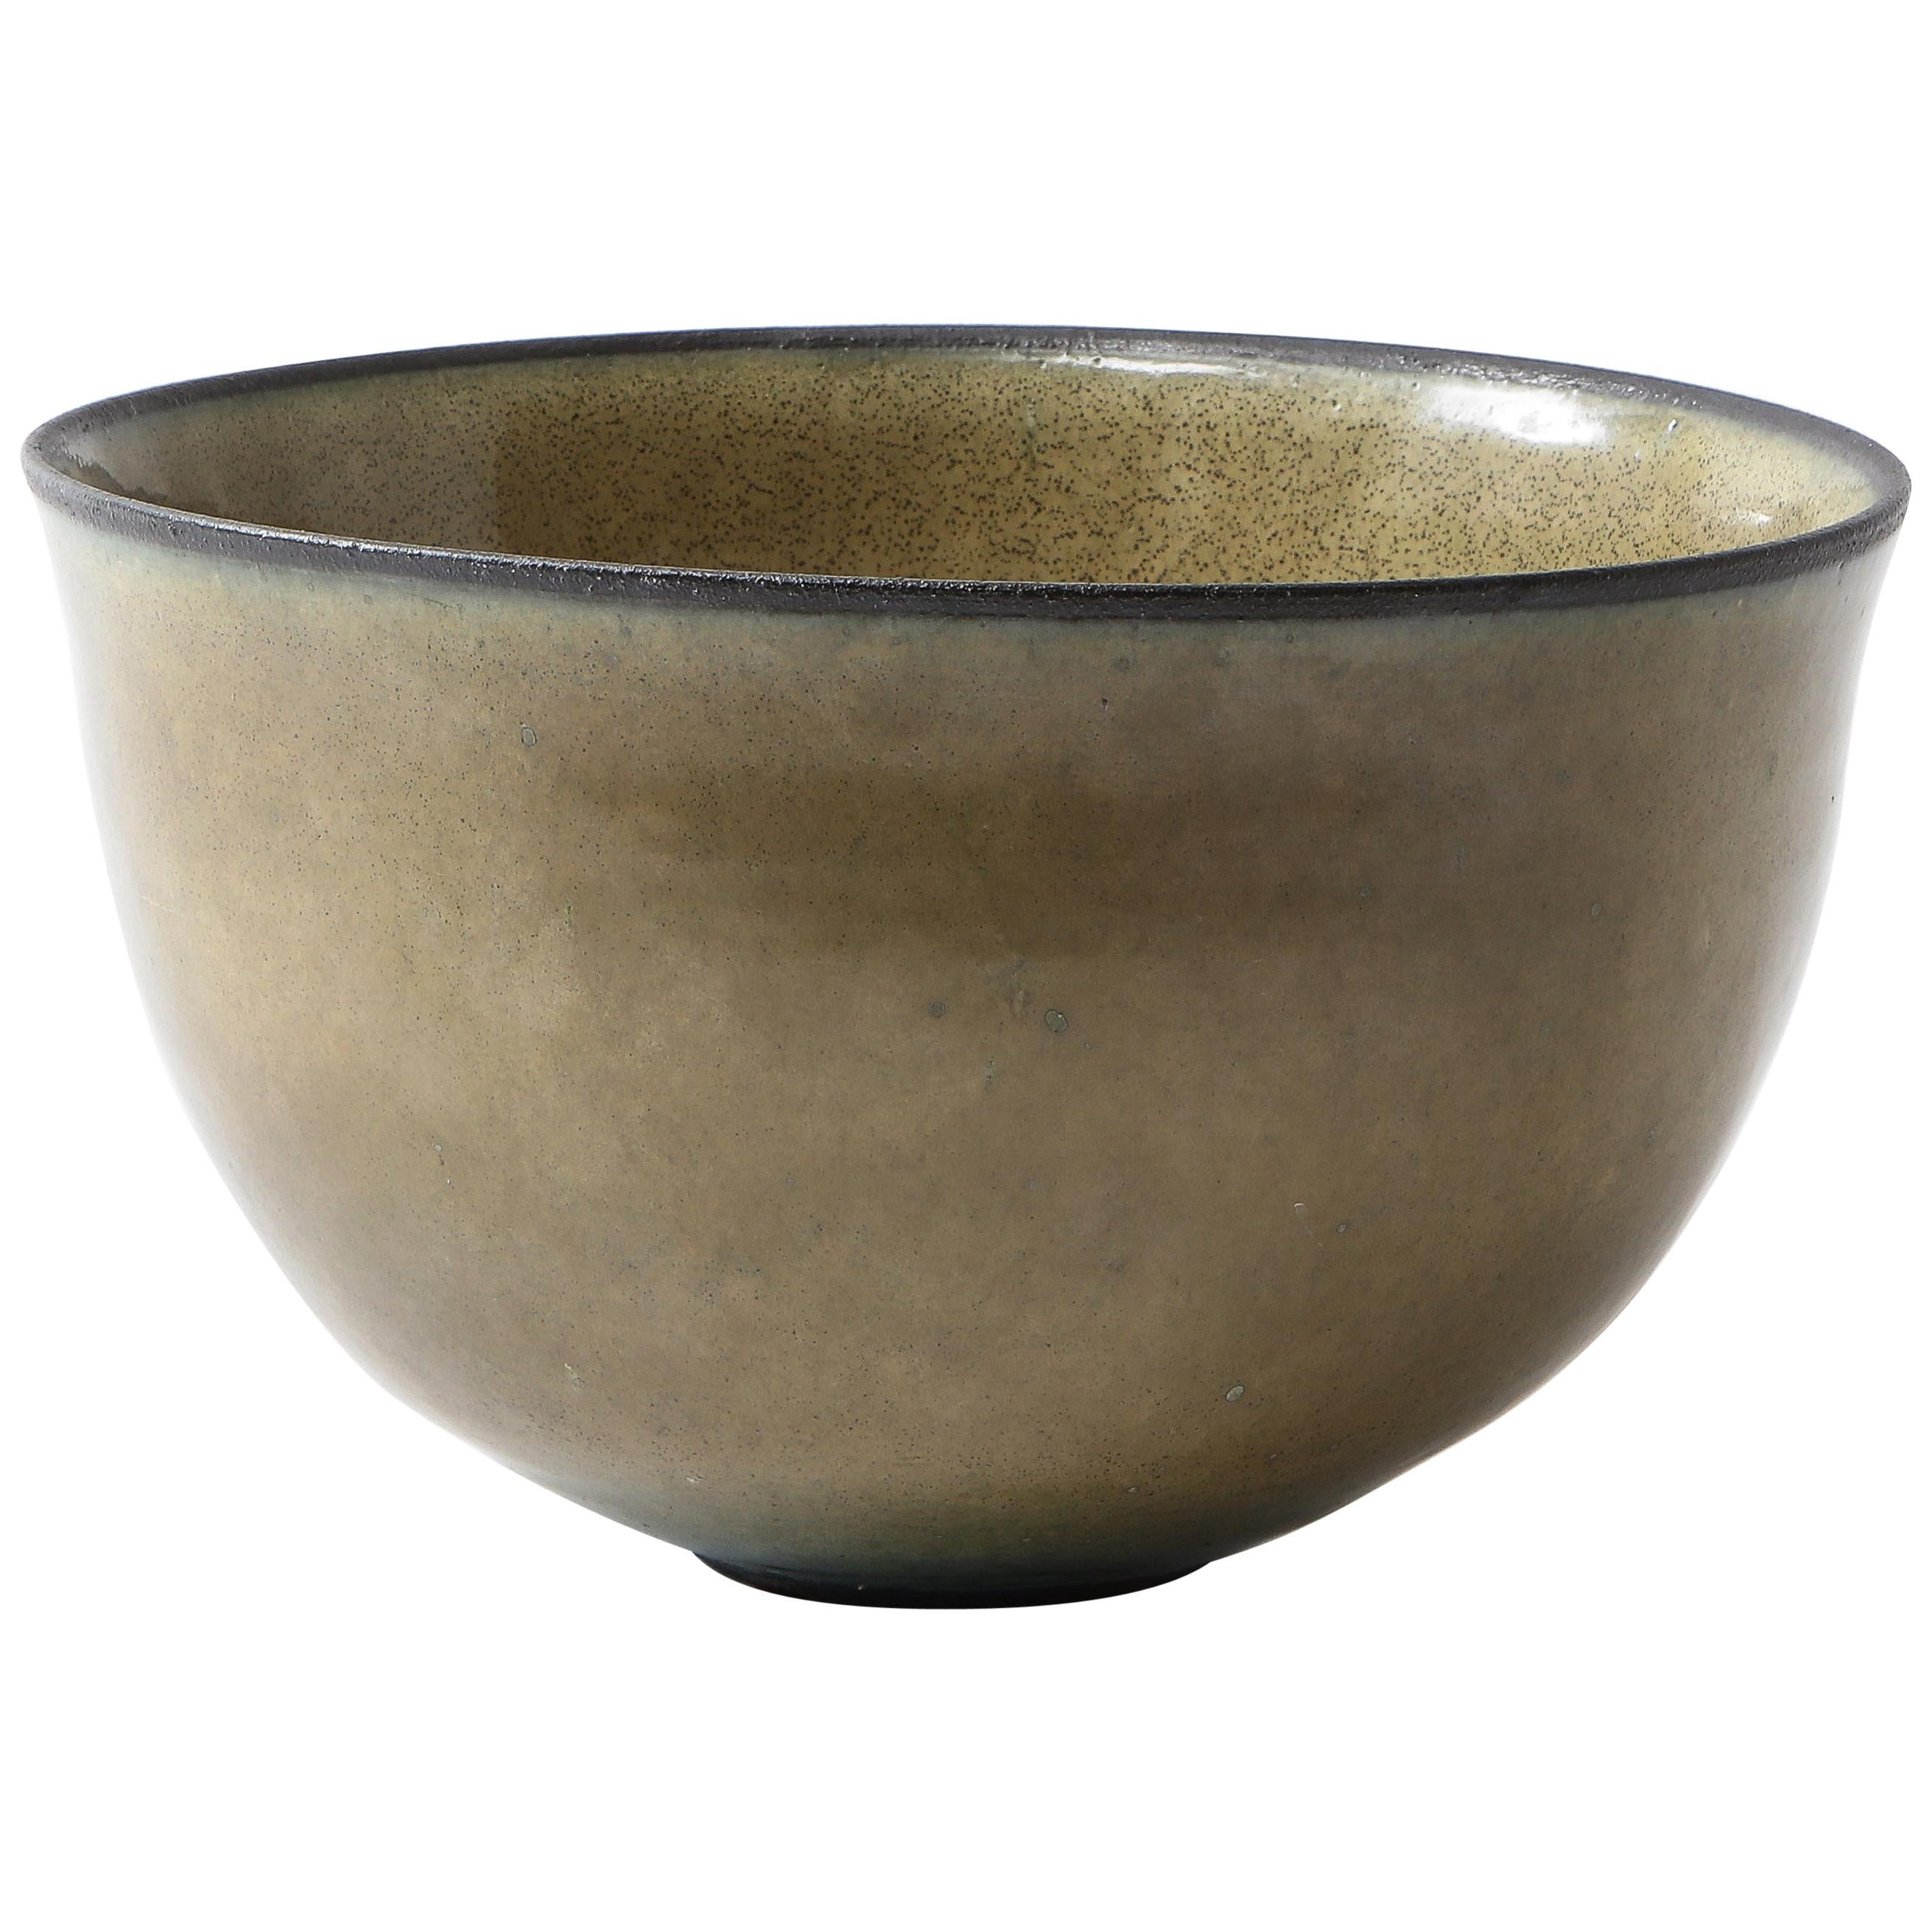 Michael Breum Ceramic Bowl, Dark Mustard with Black Lip, Signed, Denmark 1960's For Sale